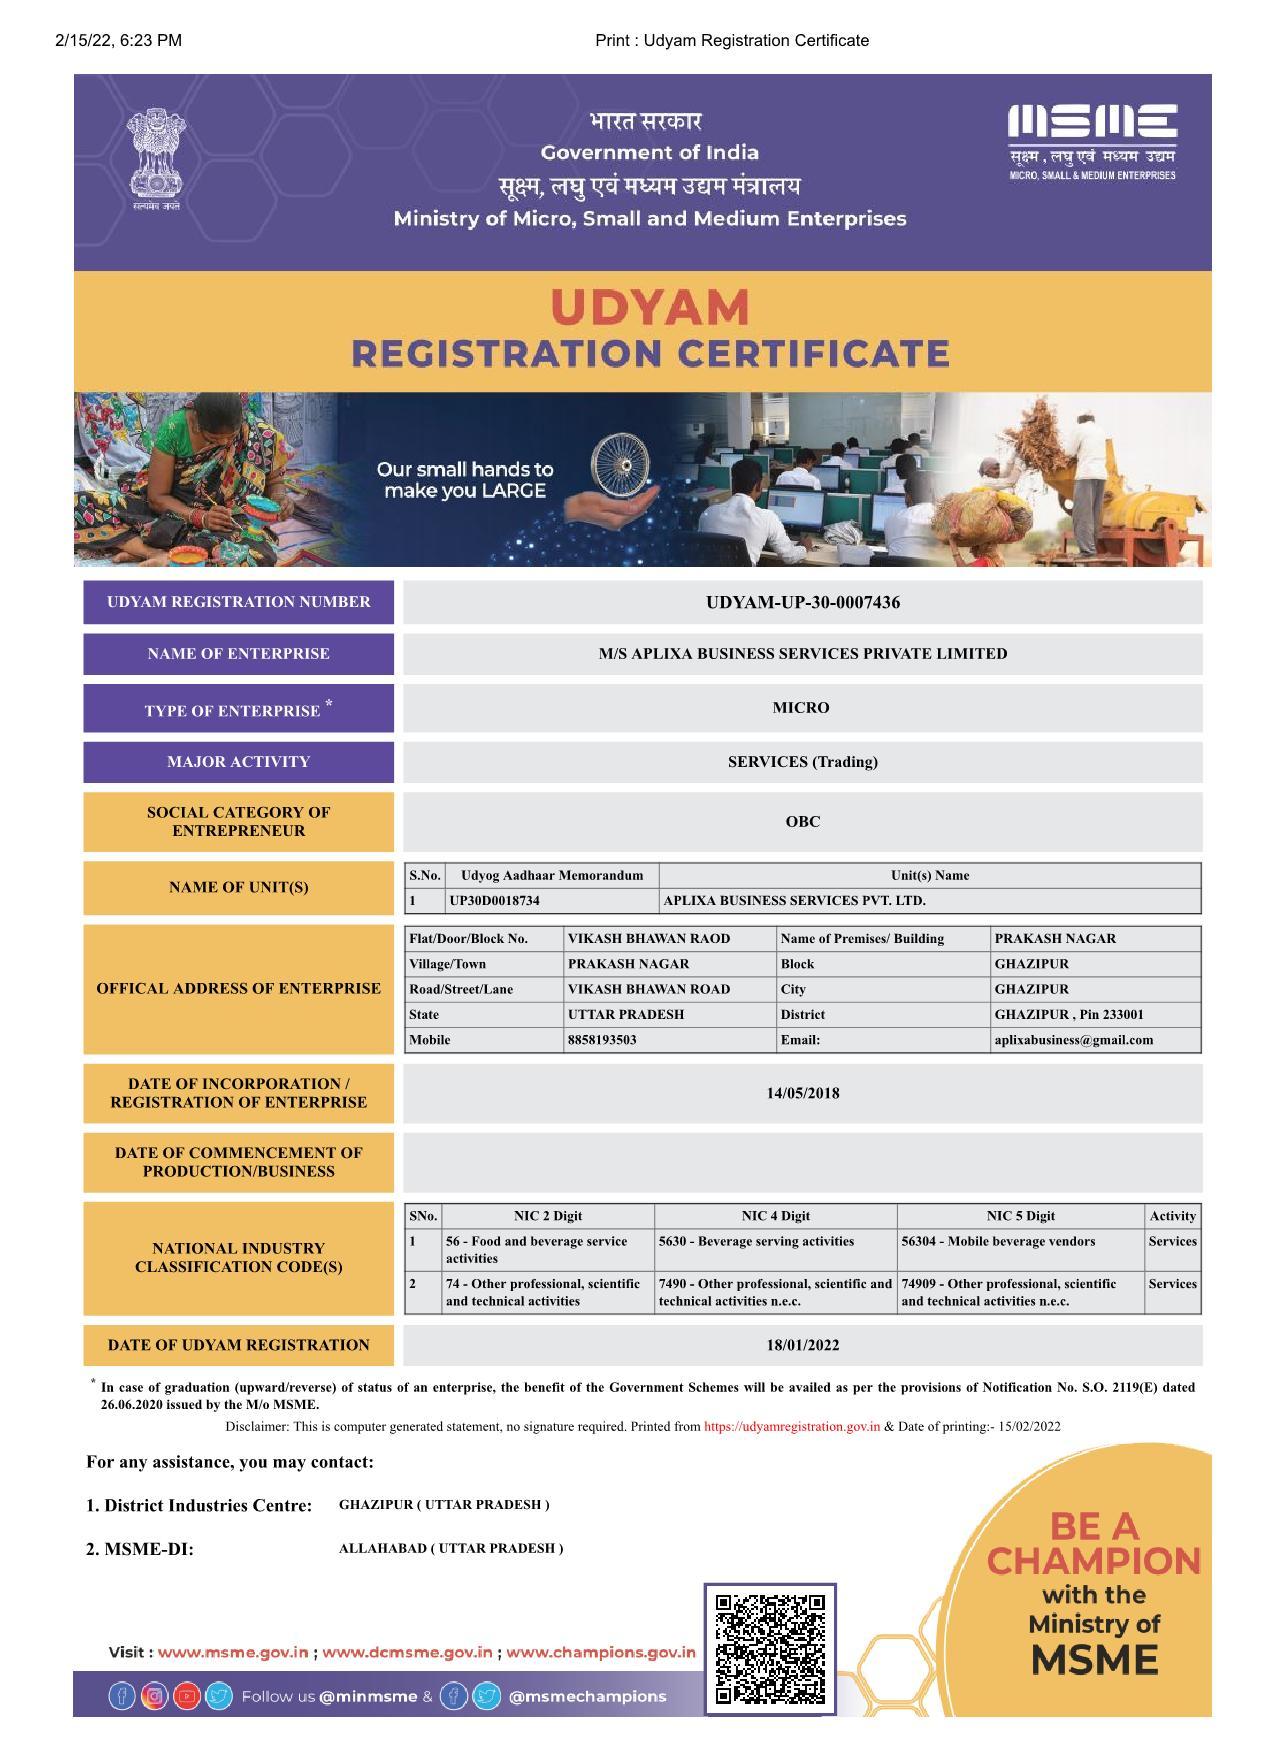 Print _ Udyam Registration Certificate_1.jpg